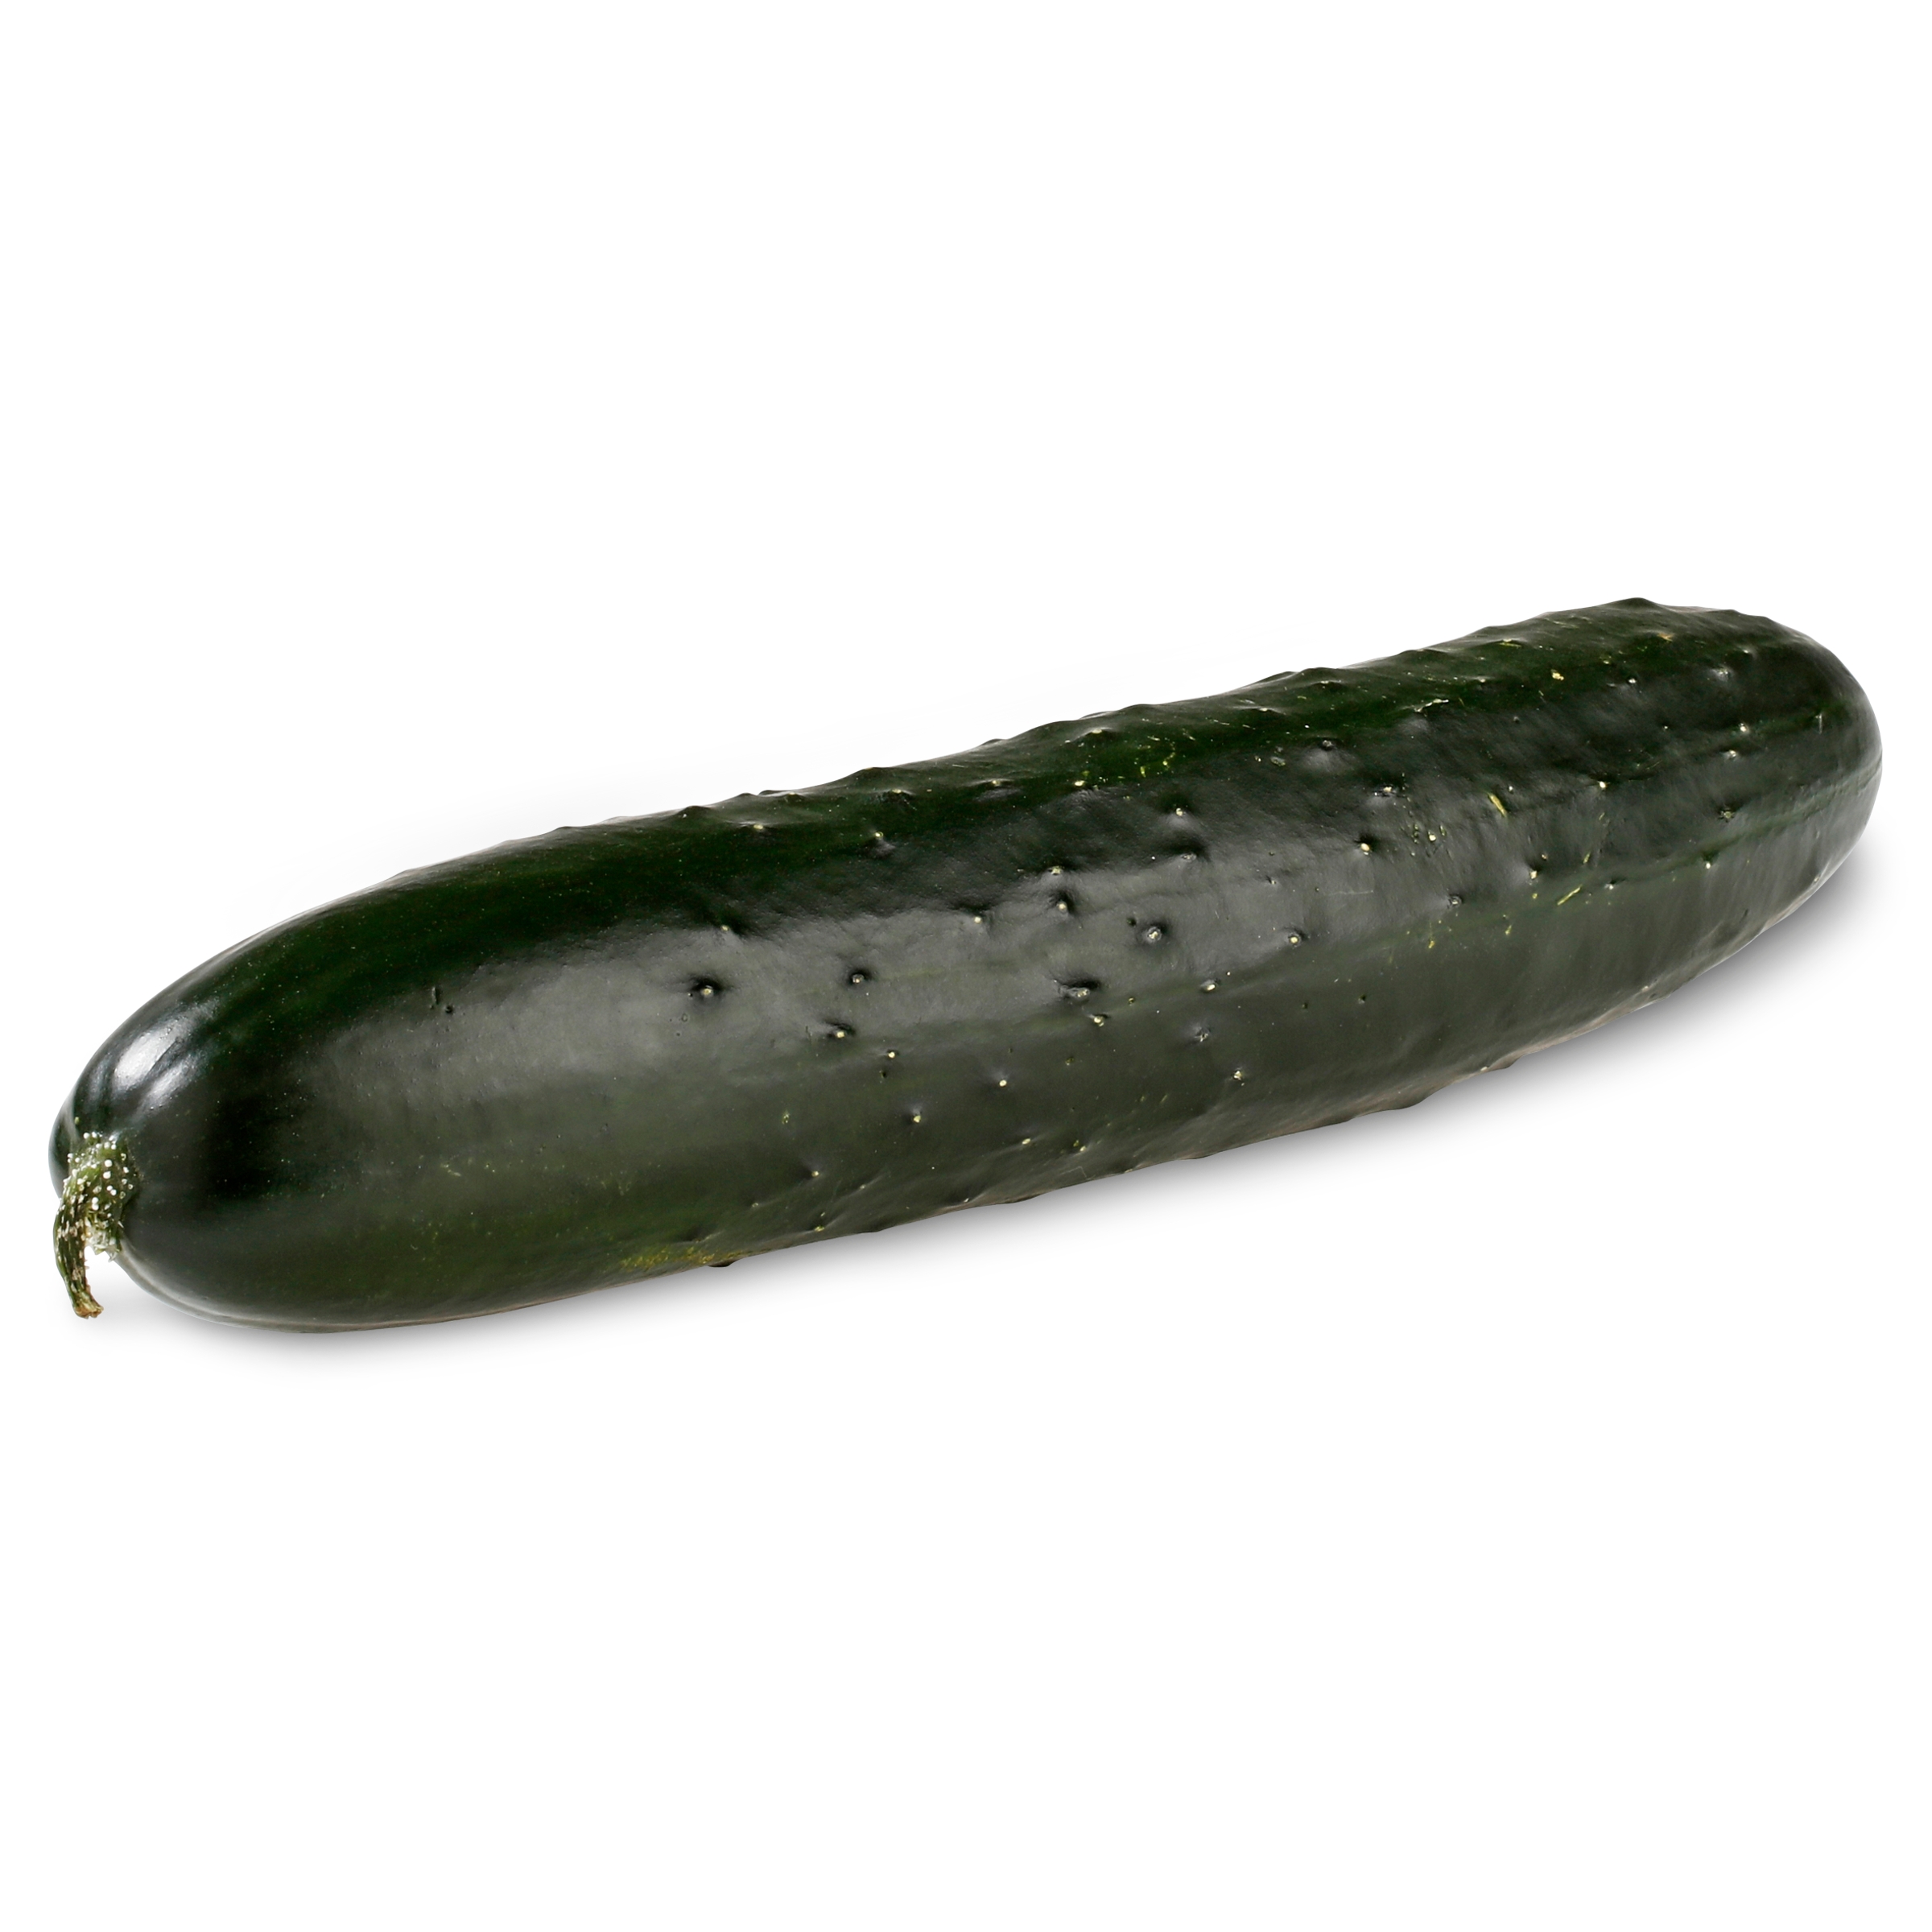 Fresh Cucumber, Each - image 1 of 4